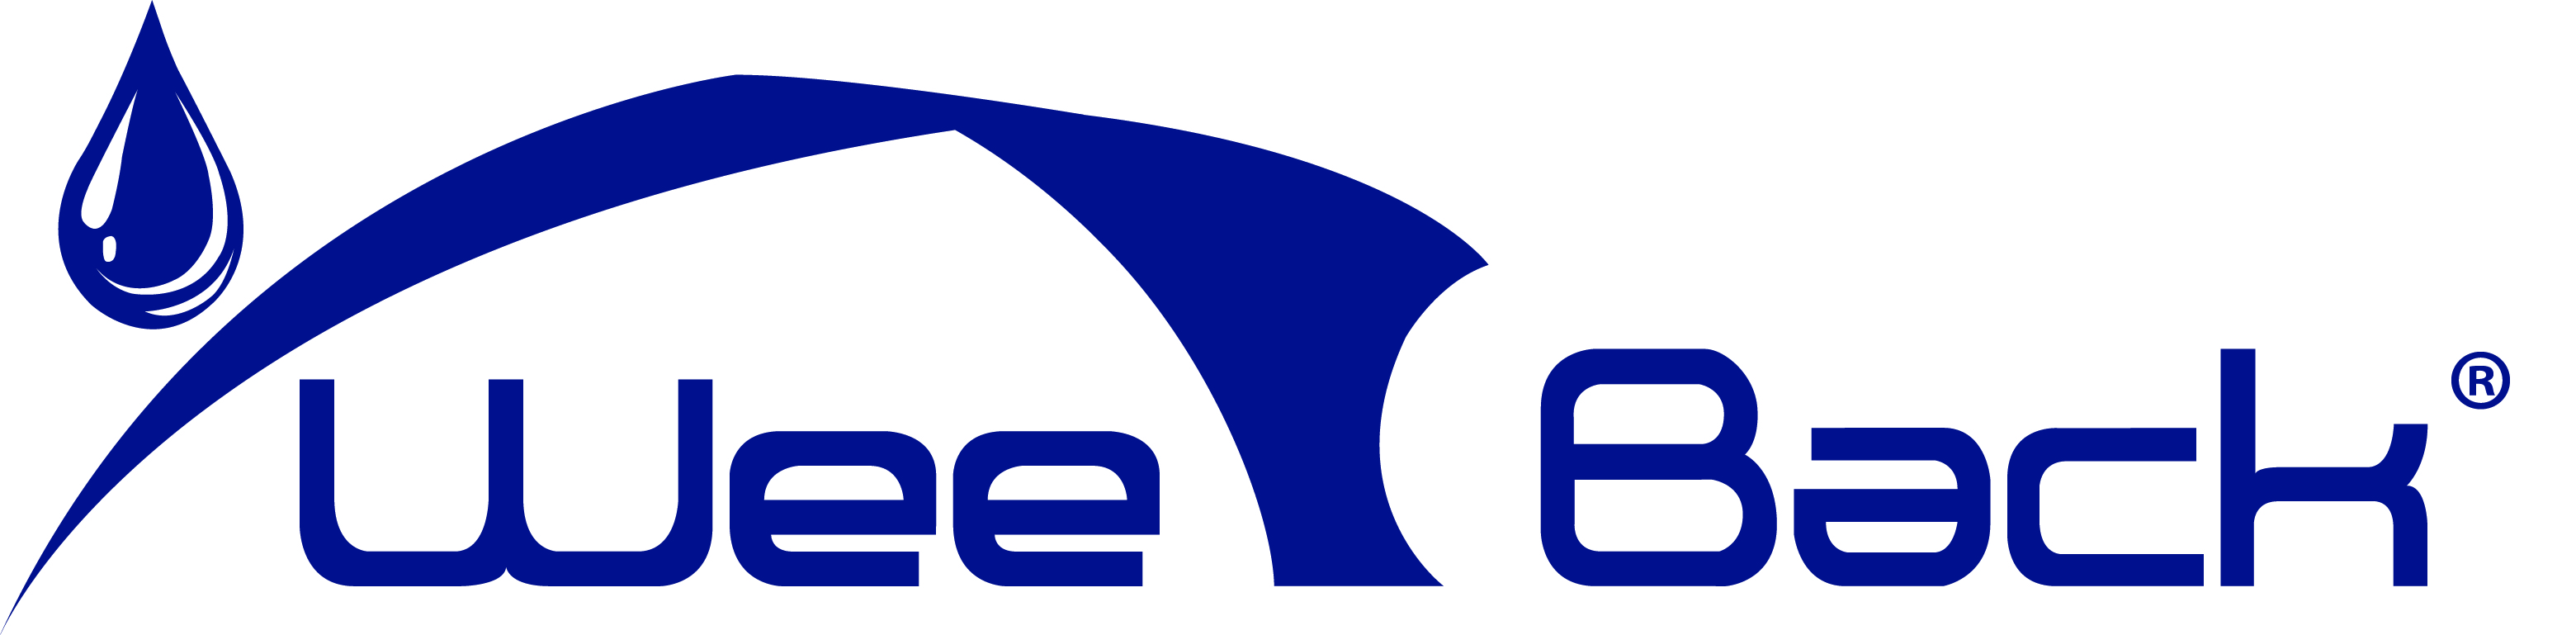 weeback logo